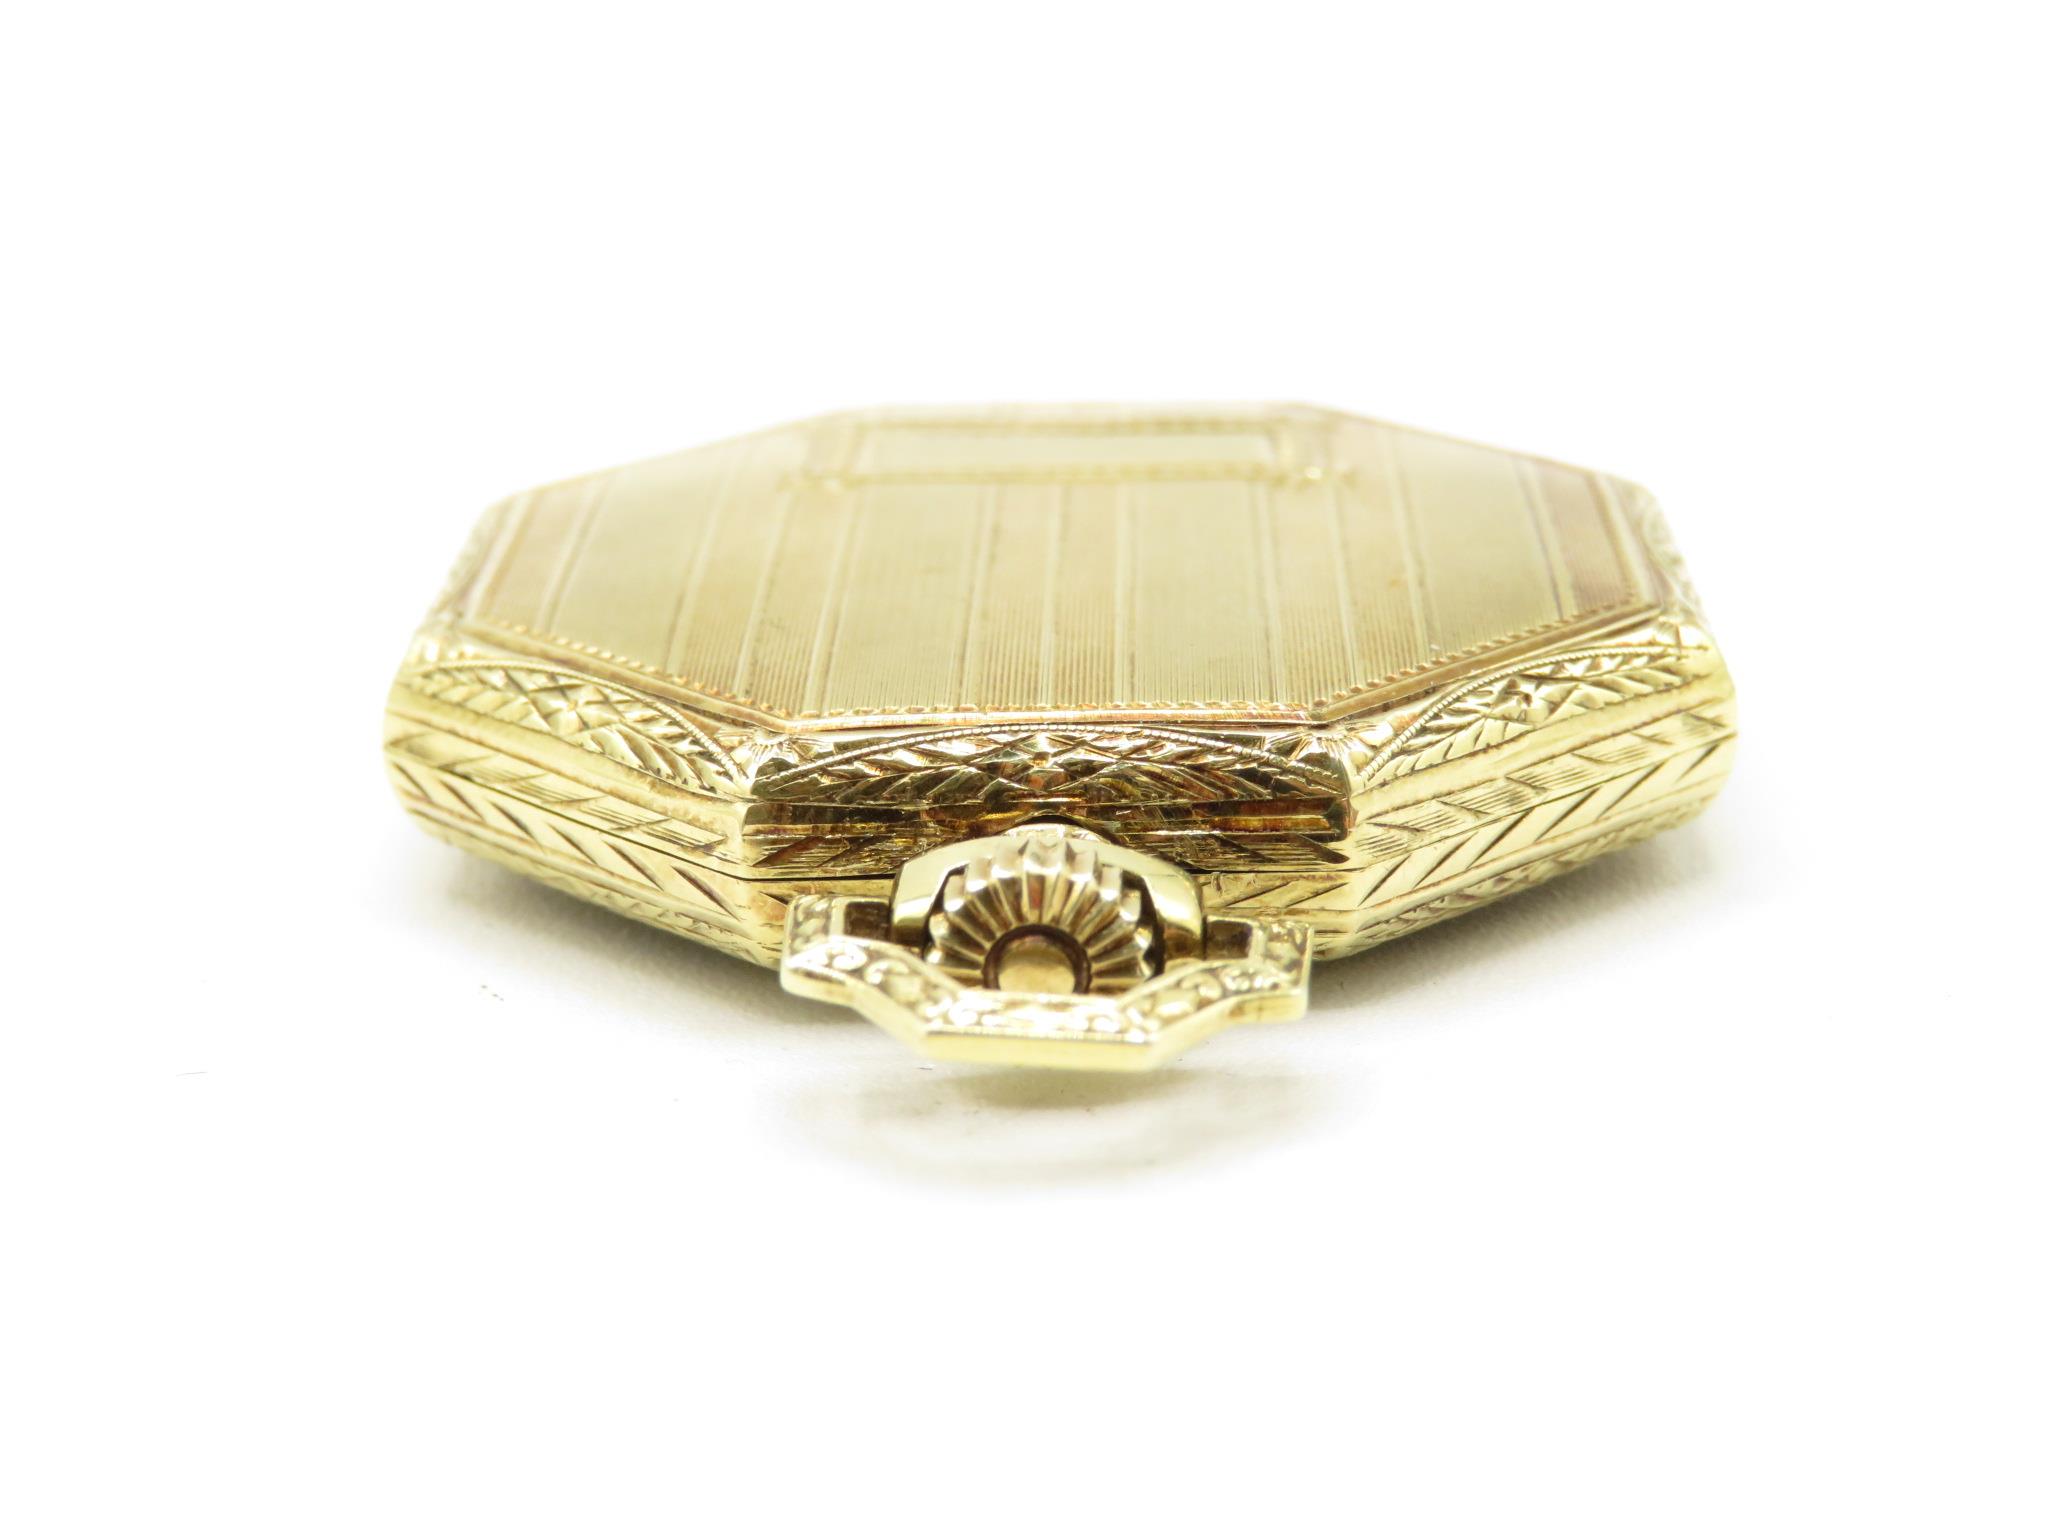 14ct gold Elgin Masonic pocket watch 43mm case with Masonic symbols on dial, movement marked Elgin - Image 4 of 6